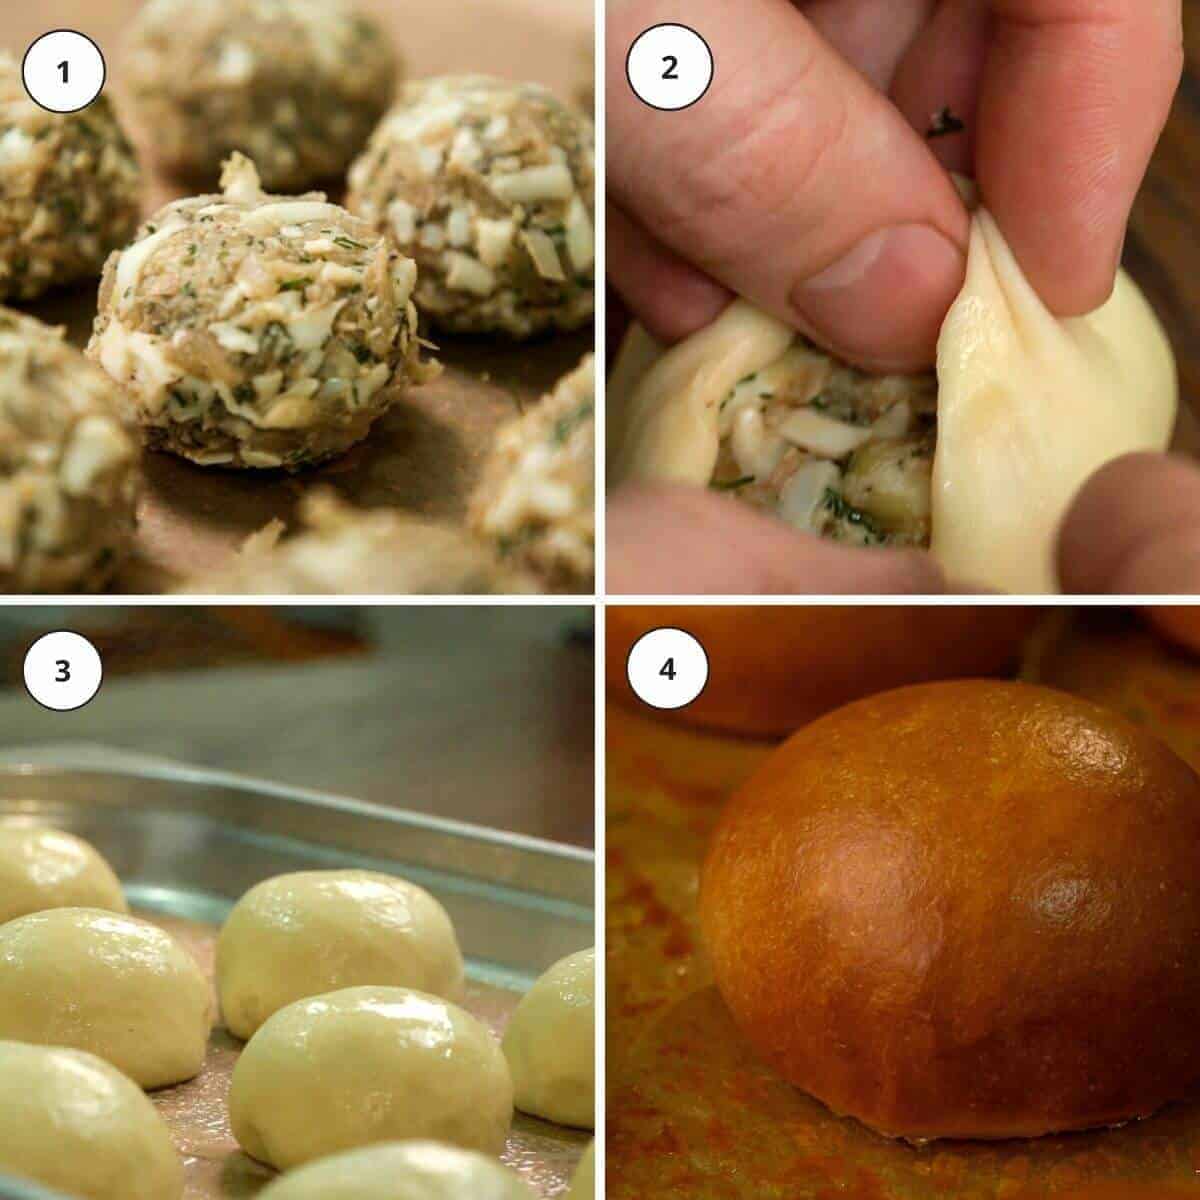 Picture steps for making cabbage piroshki.